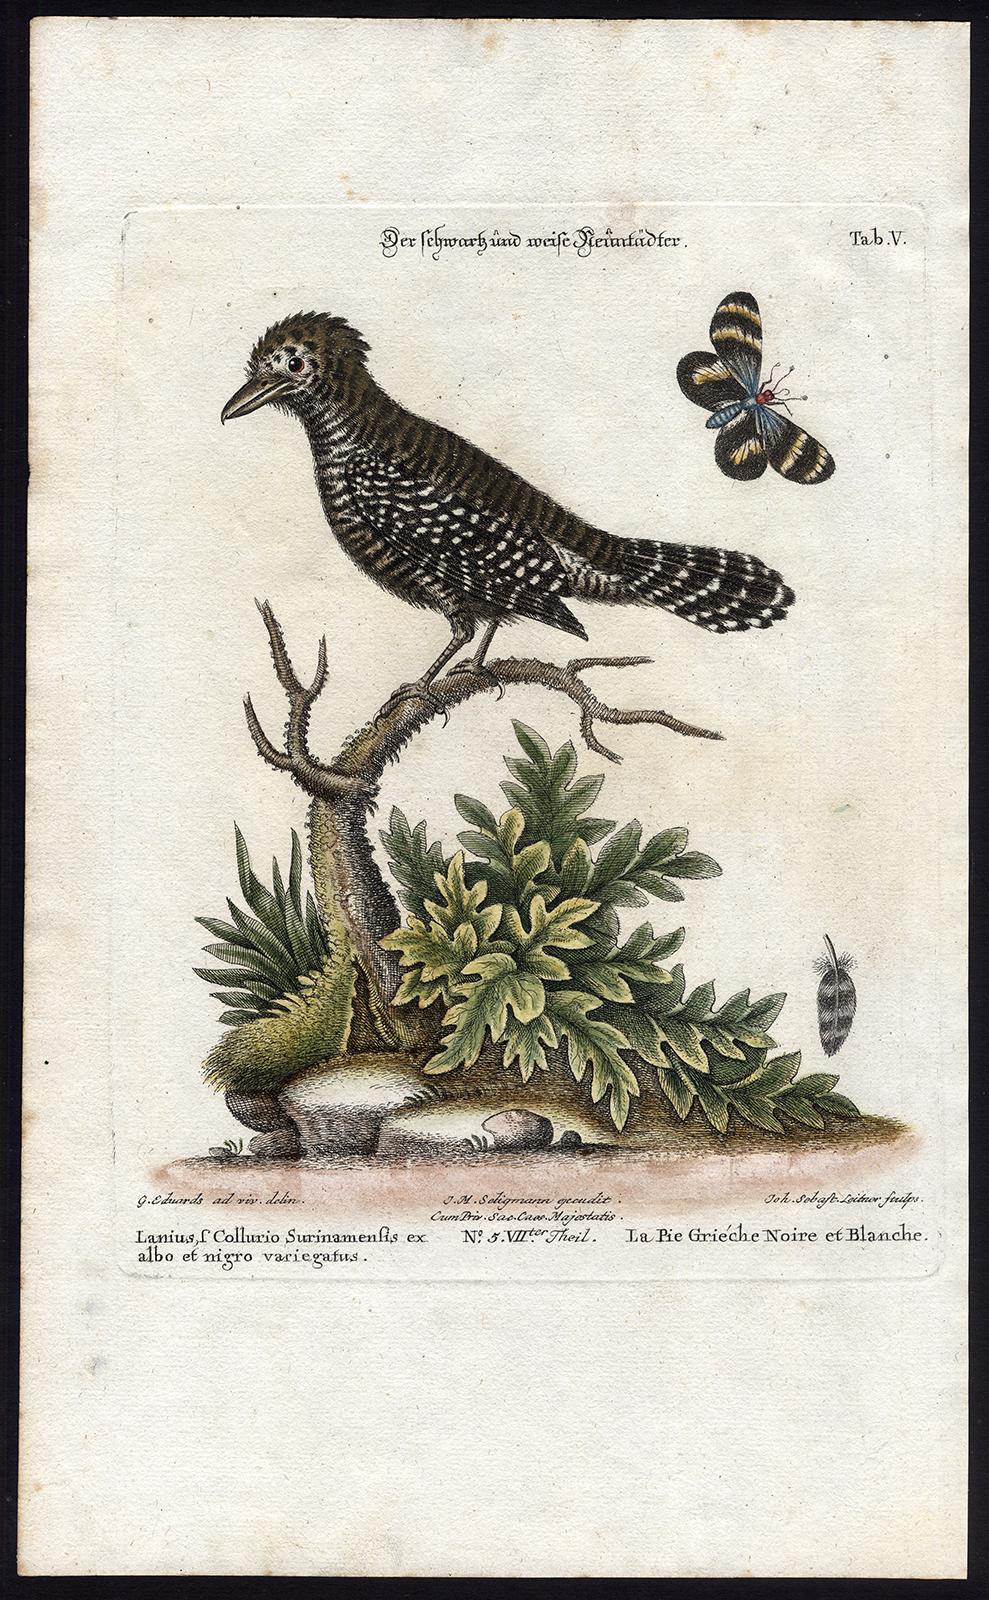 Johann Michael Seligmann Animal Print - Black and White Butcher-Bird by Seligmann - Handcoloured etching - 18th century